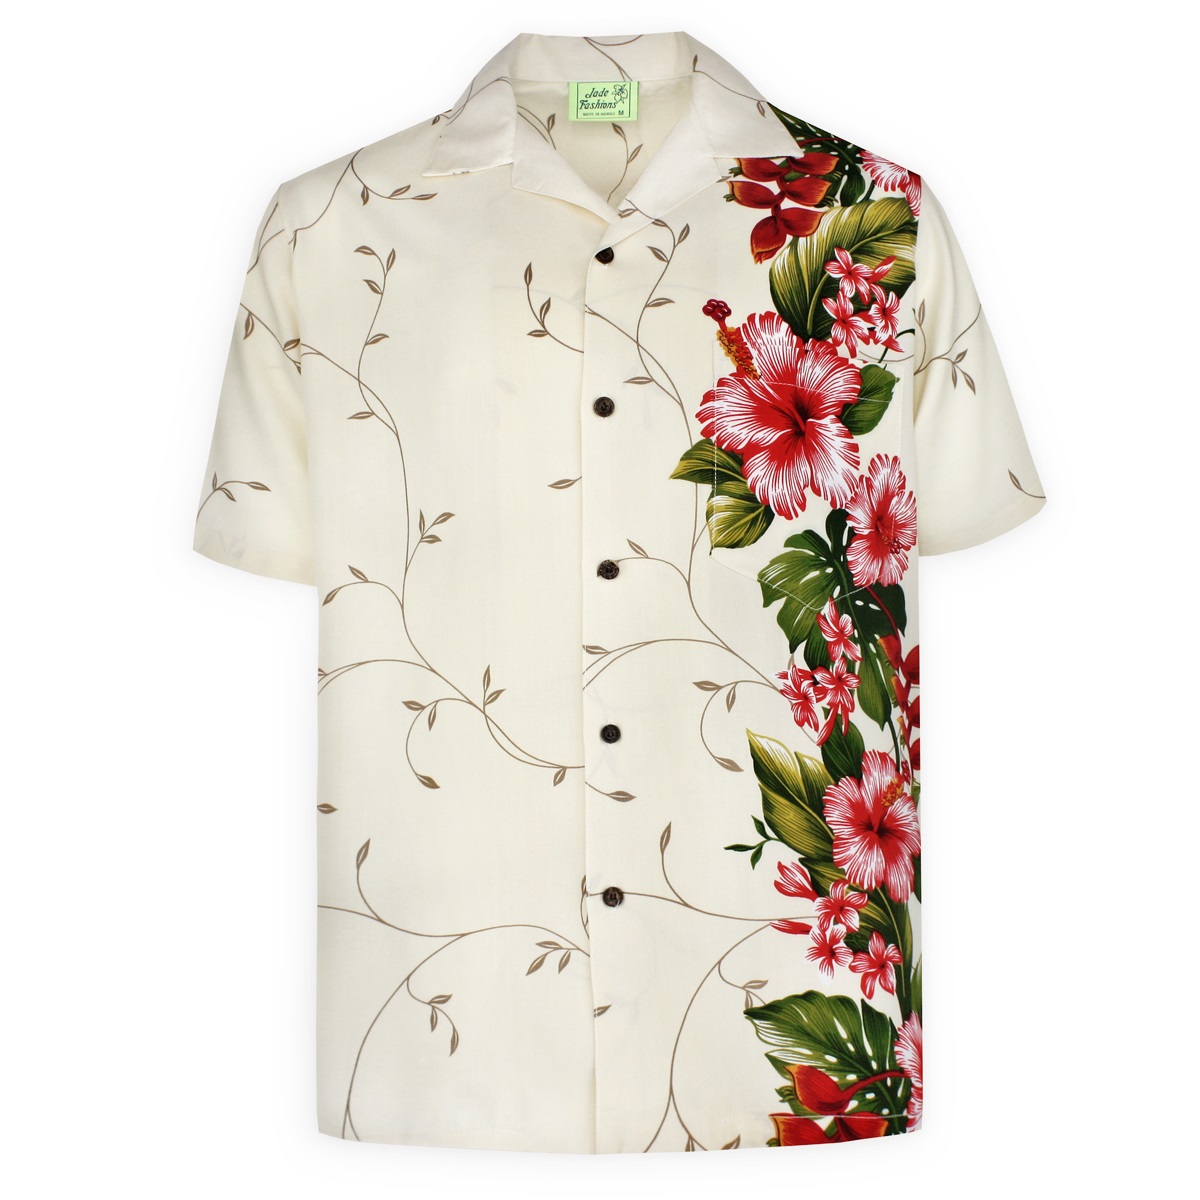 mens-hawaiian-shirt-paradise-garden-cream-front-view